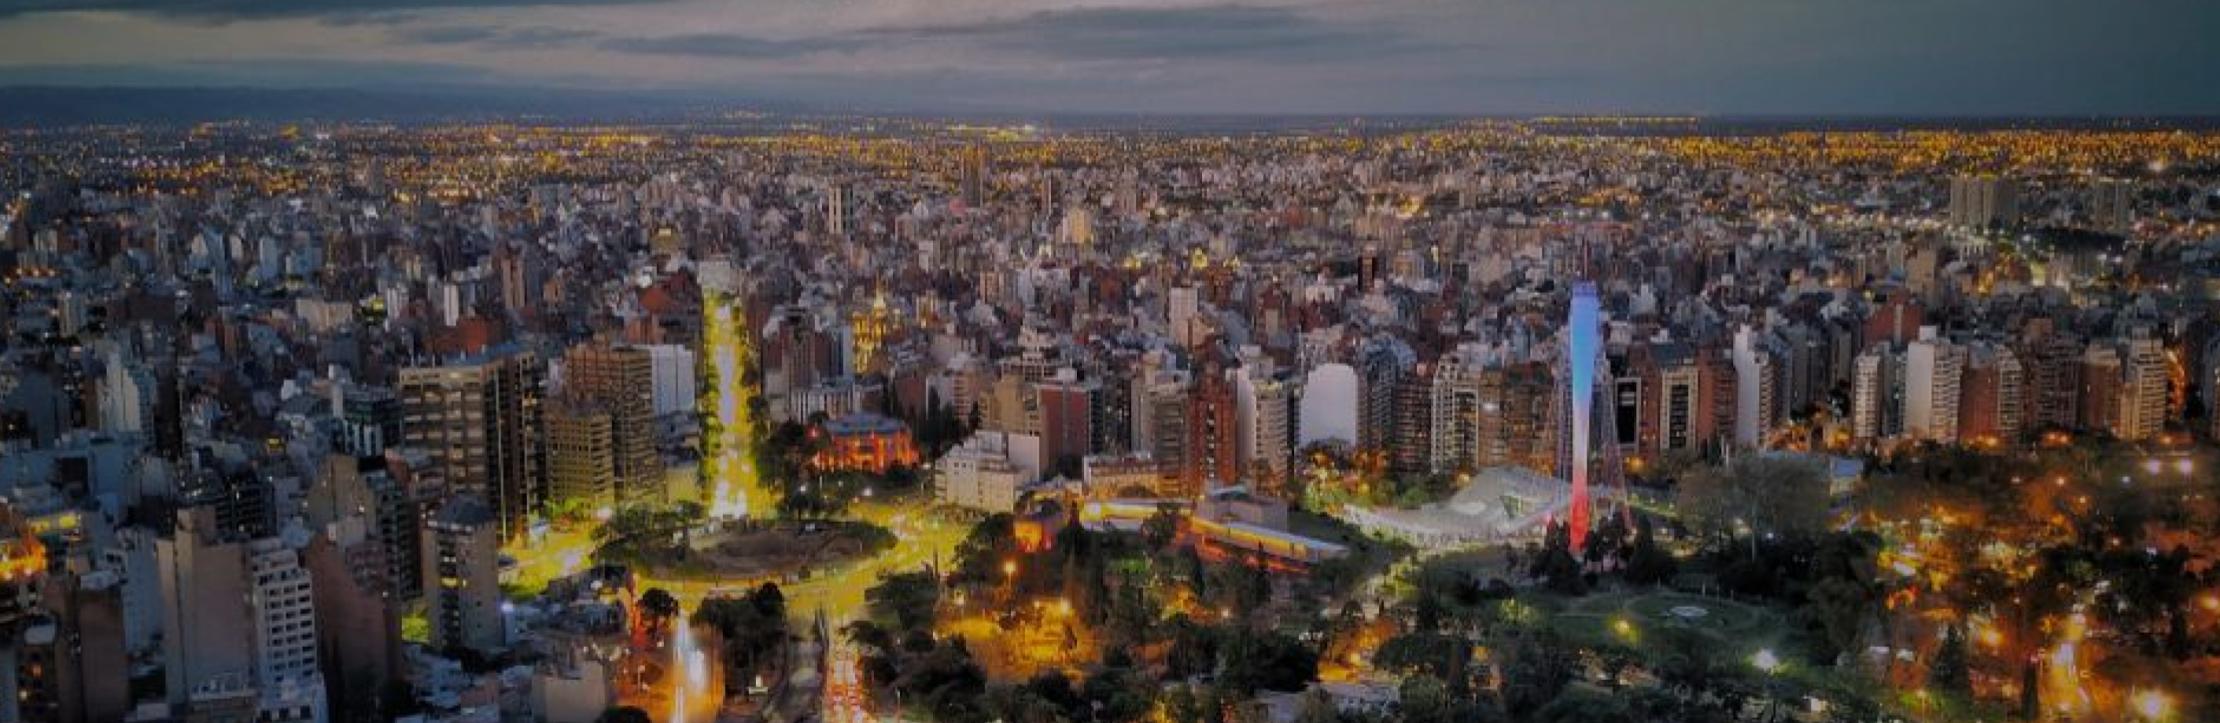 Ciudad de Córdoba vista aérea